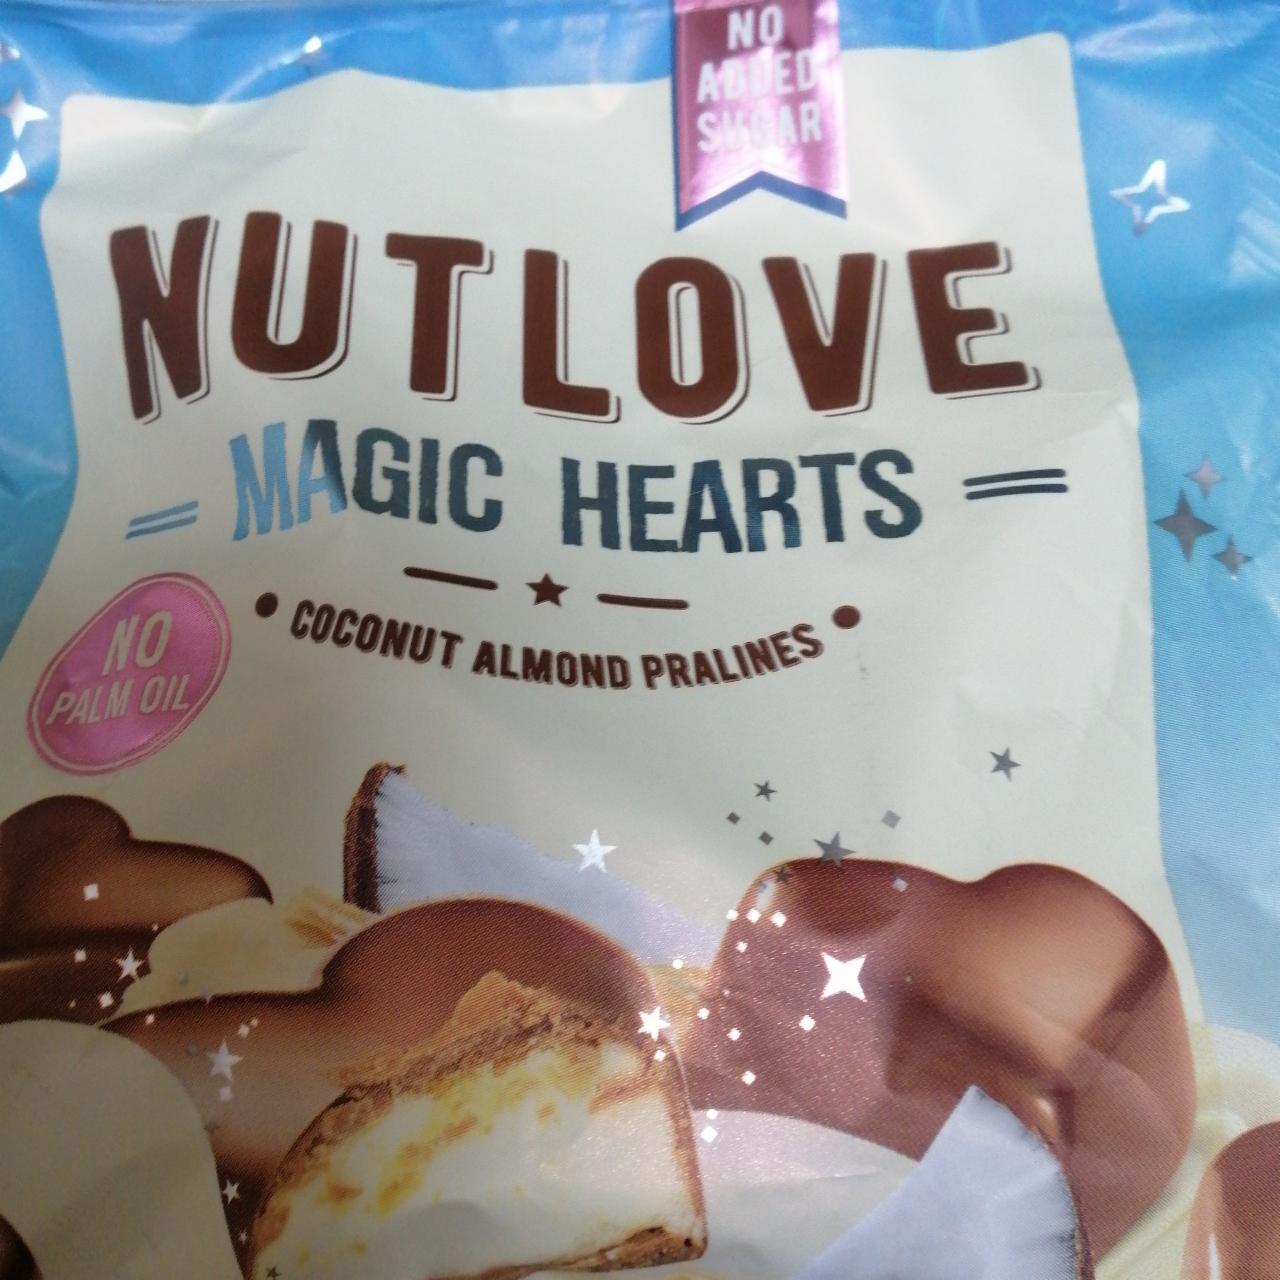 Fotografie - Nutlove magic hearts coconut almond pralines Allnutrition